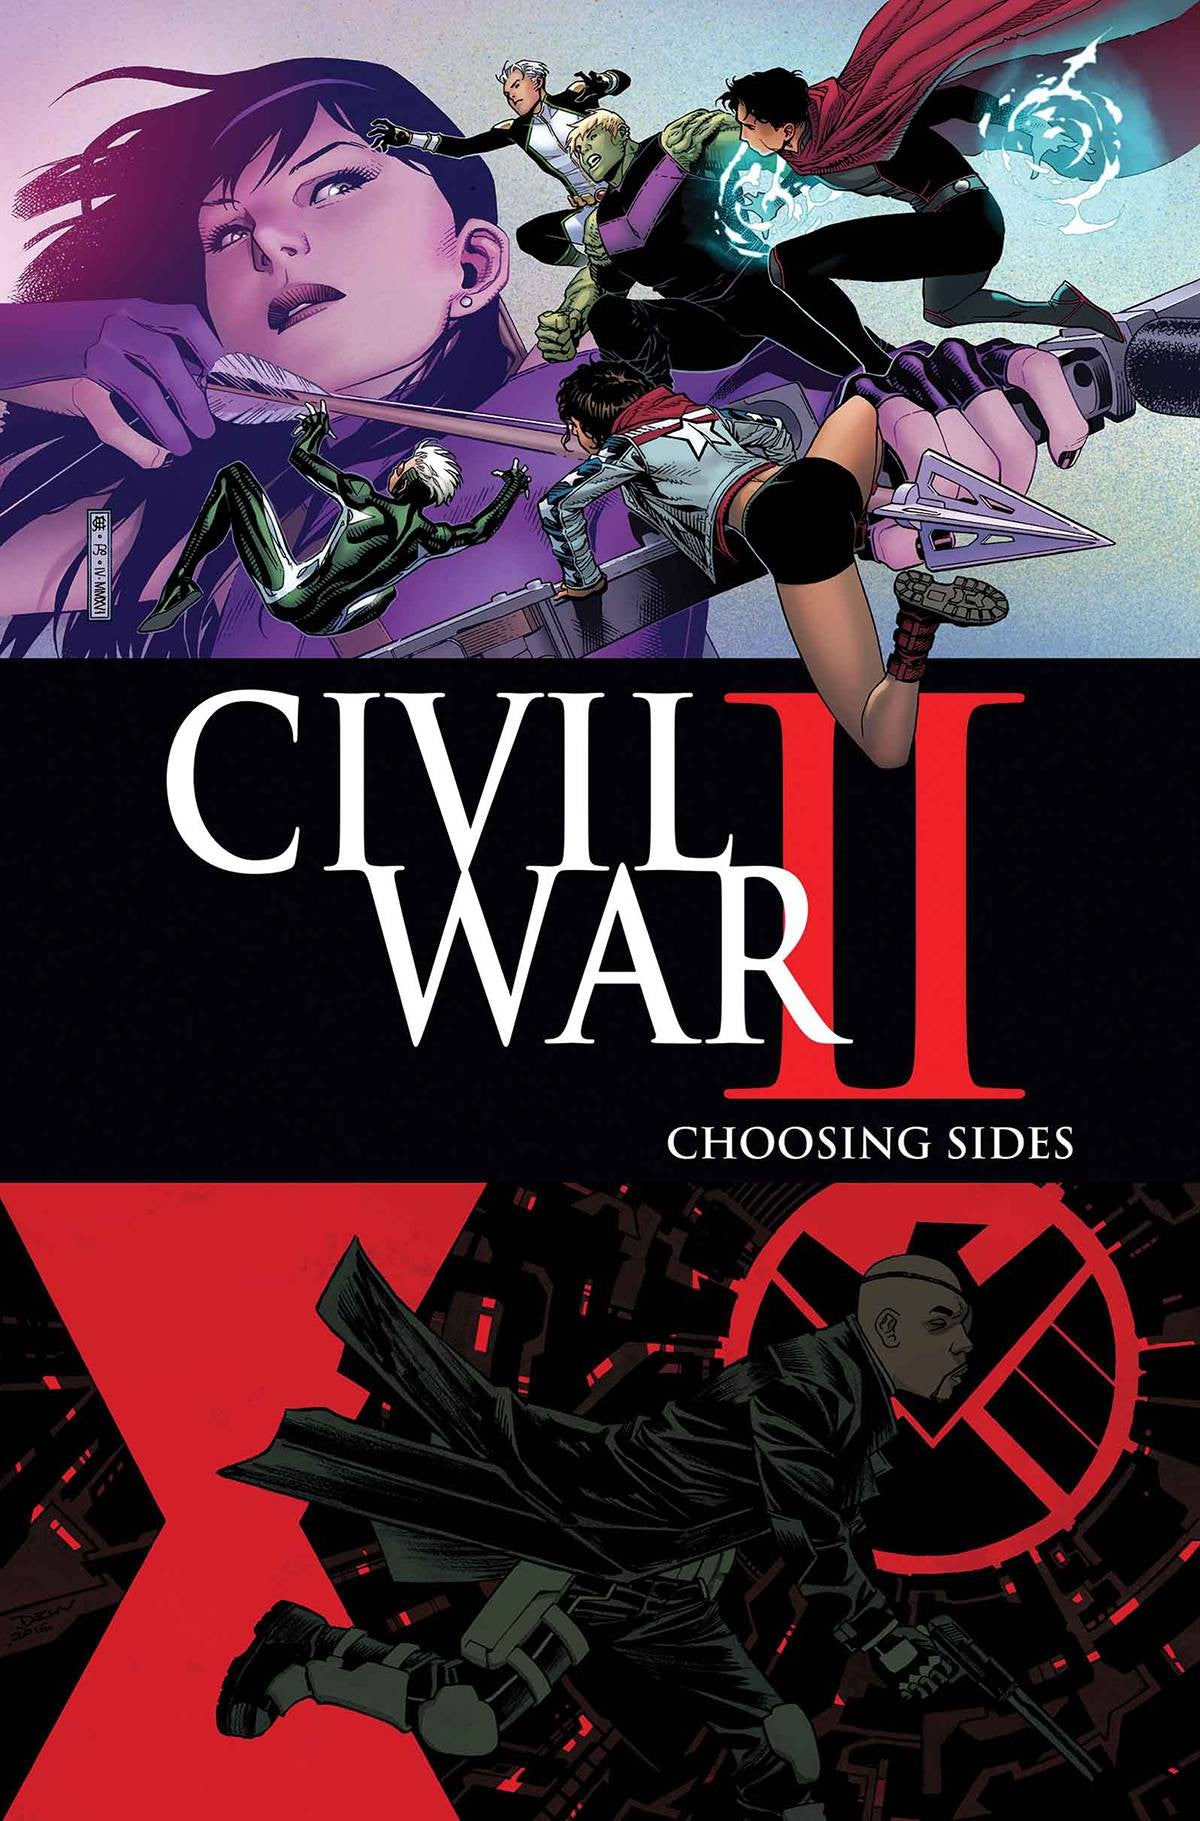 CIVIL WAR II CHOOSING SIDES #4 (OF 6) COVER